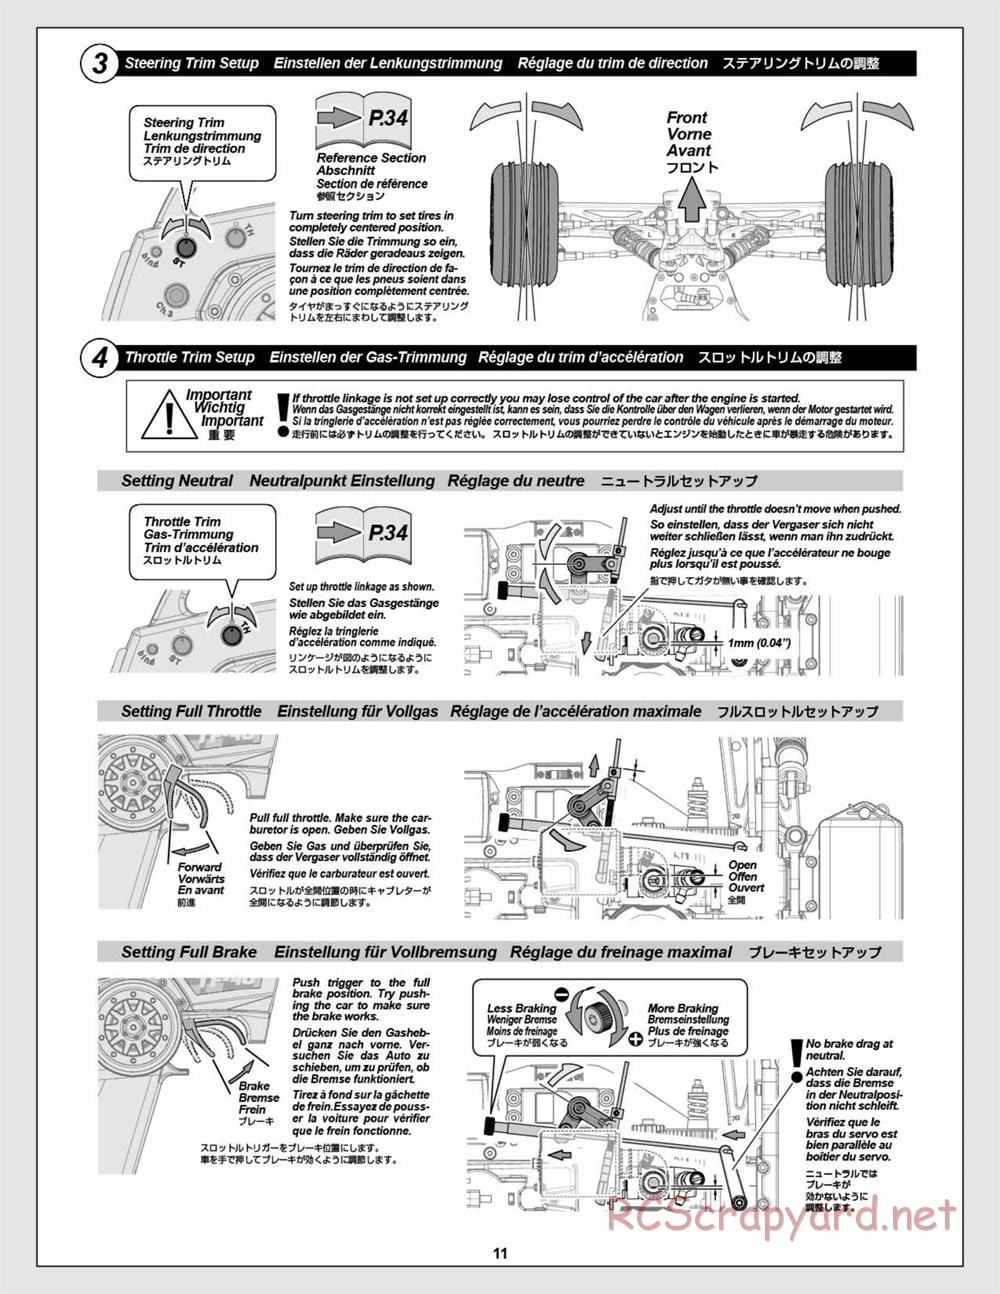 HPI - Firestorm 10T - Manual - Page 11